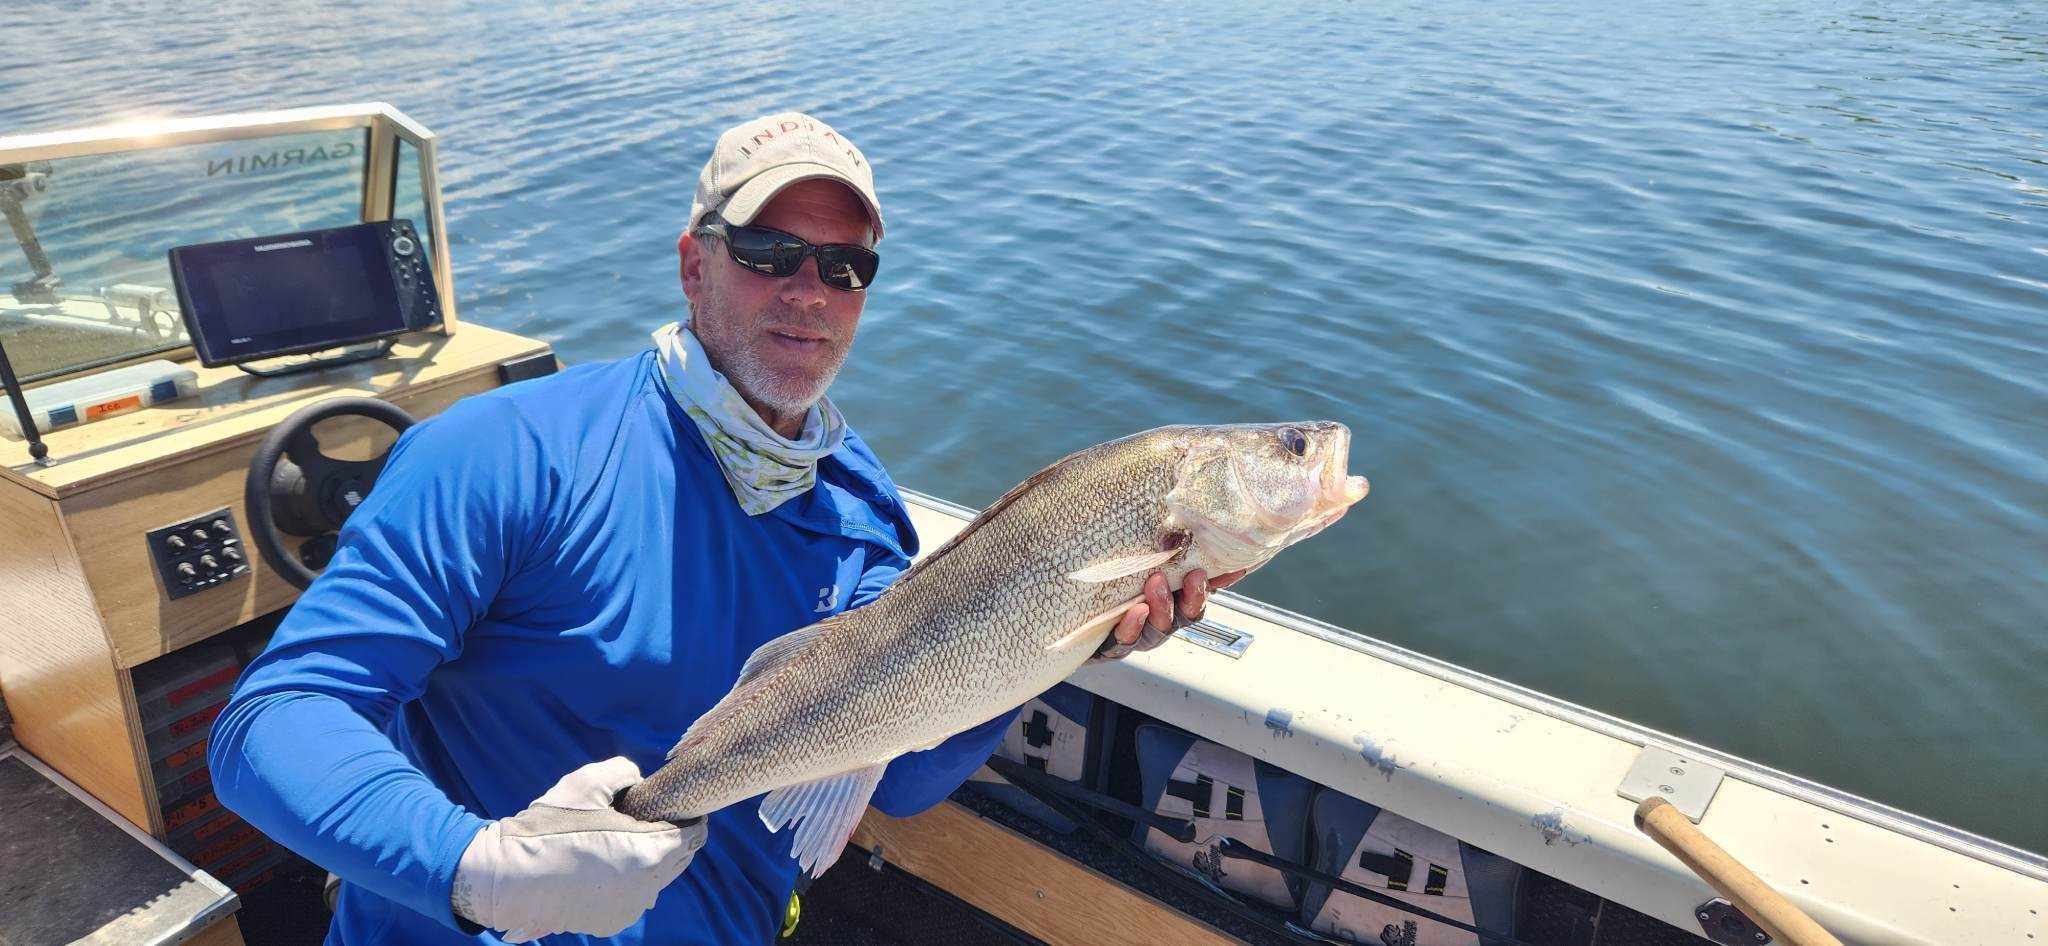 BadAss Fishing Adventures, LLC. Guided Fishing Trip | 2 Day Charter Trip  fishing Lake